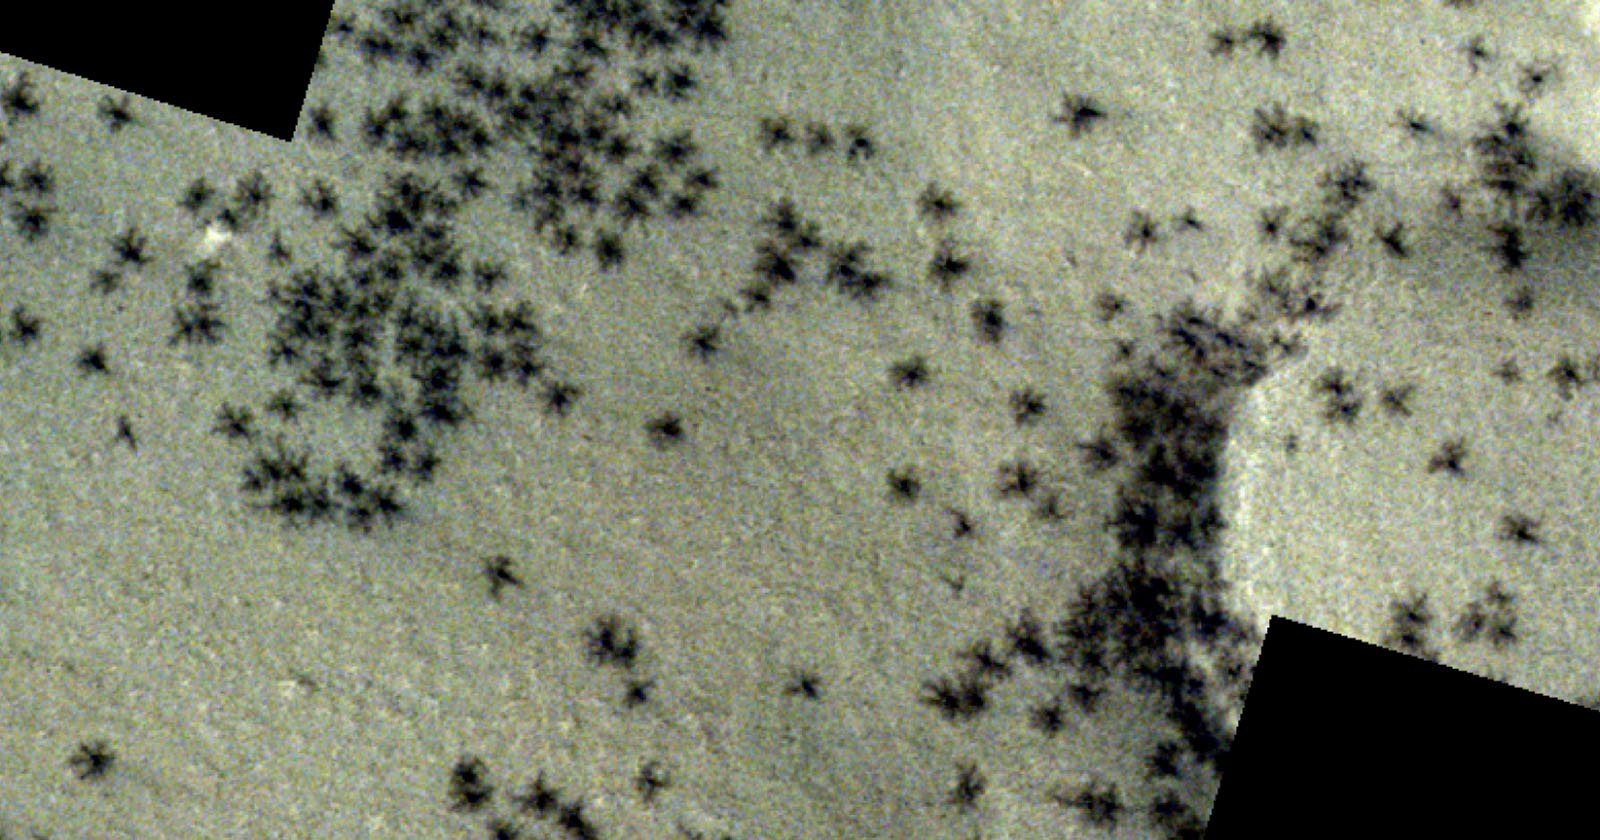  satellite photo shows army black spiders mars 